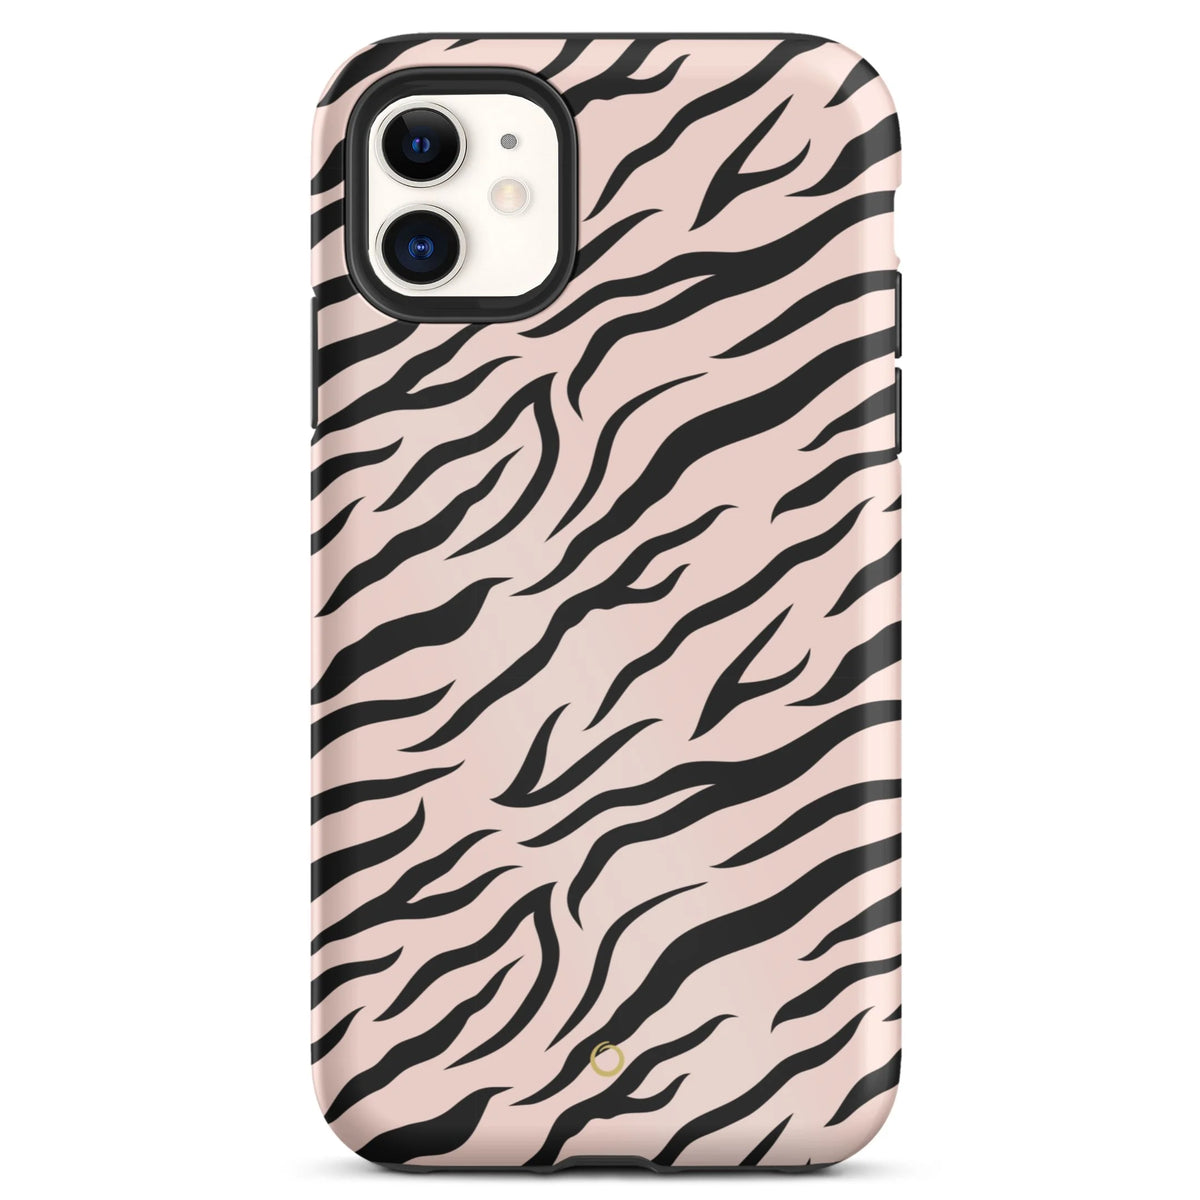 Zebra iPhone 11 Case